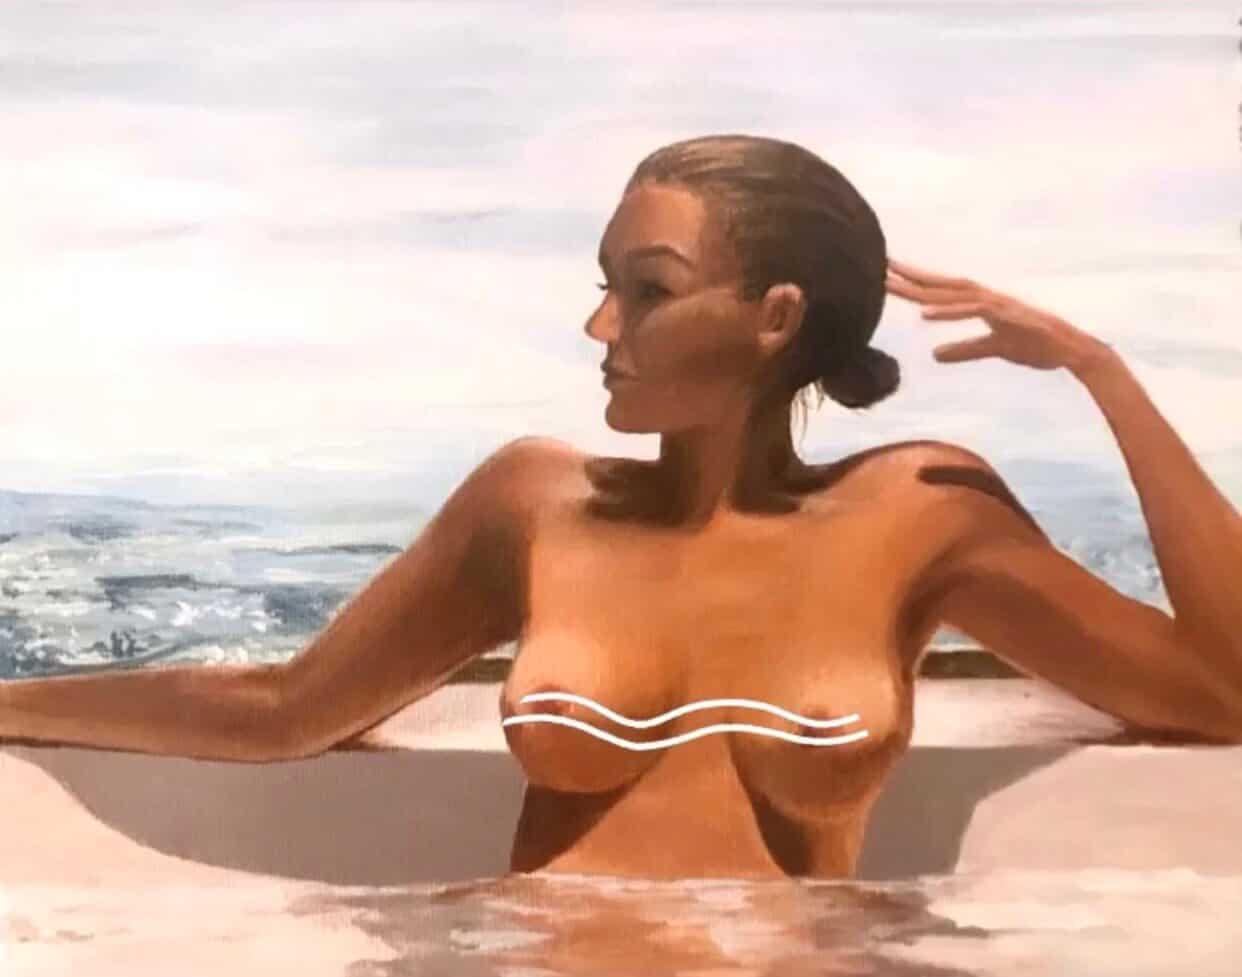 Female Figure Body Portrait in Water on Vacation